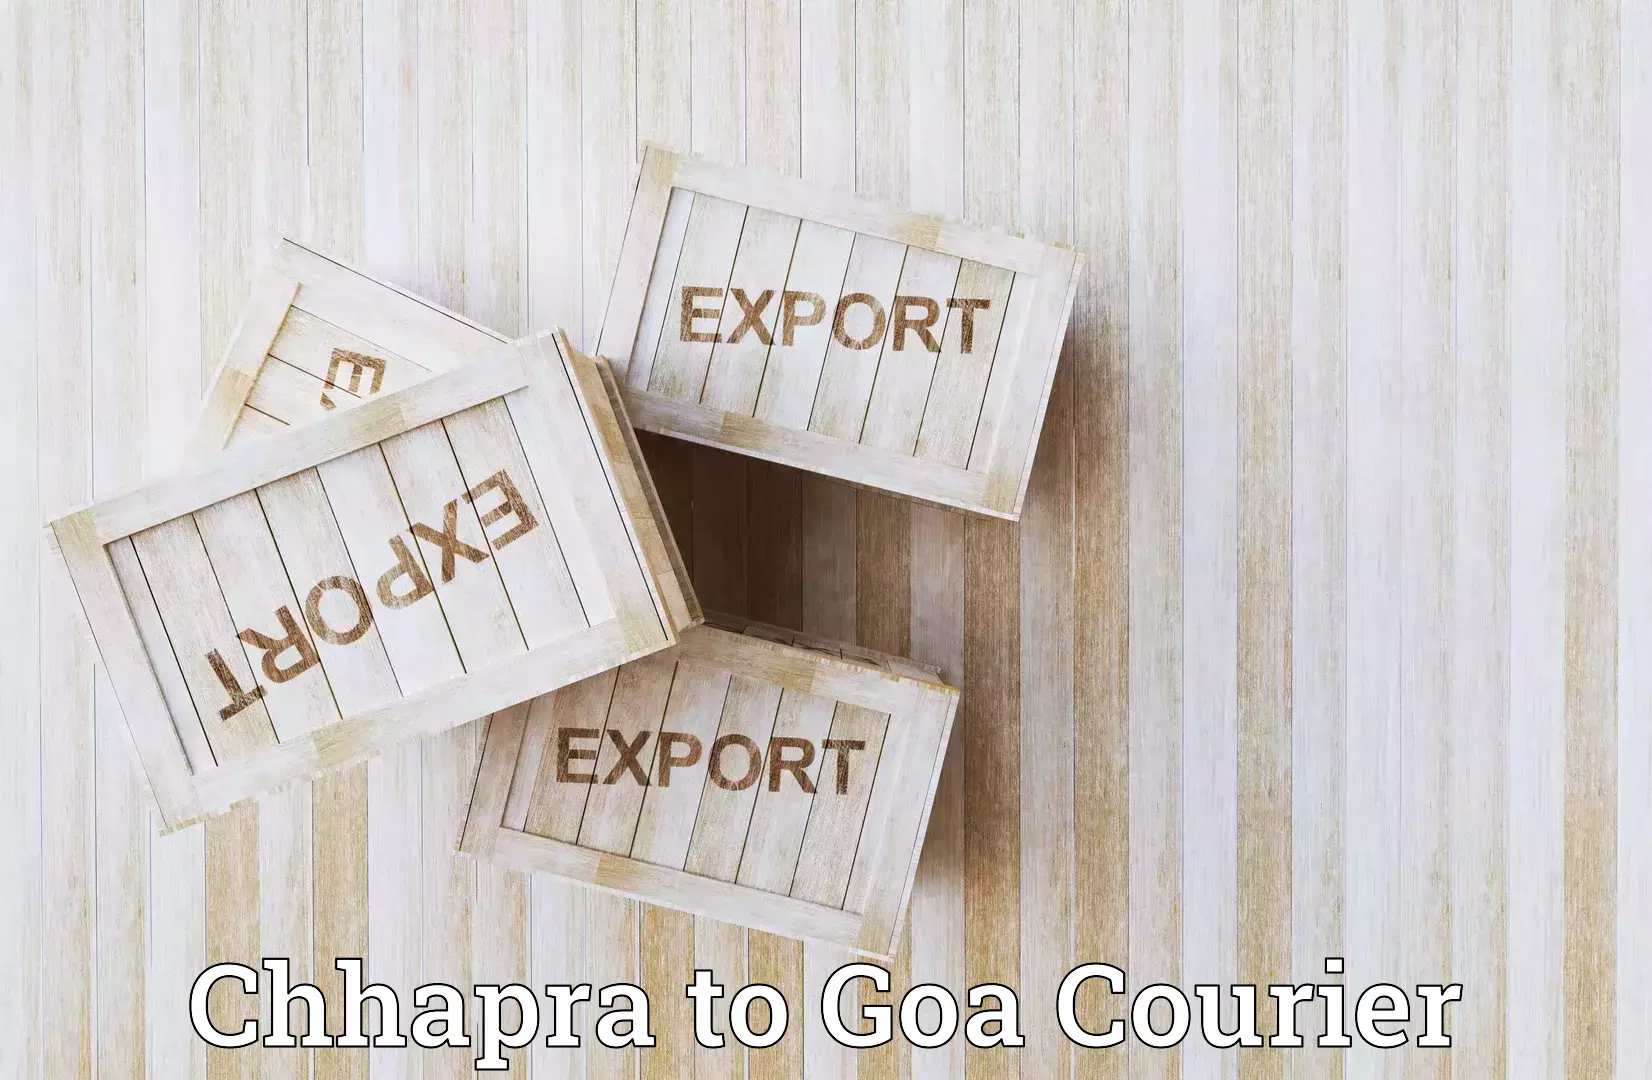 Efficient order fulfillment in Chhapra to Goa